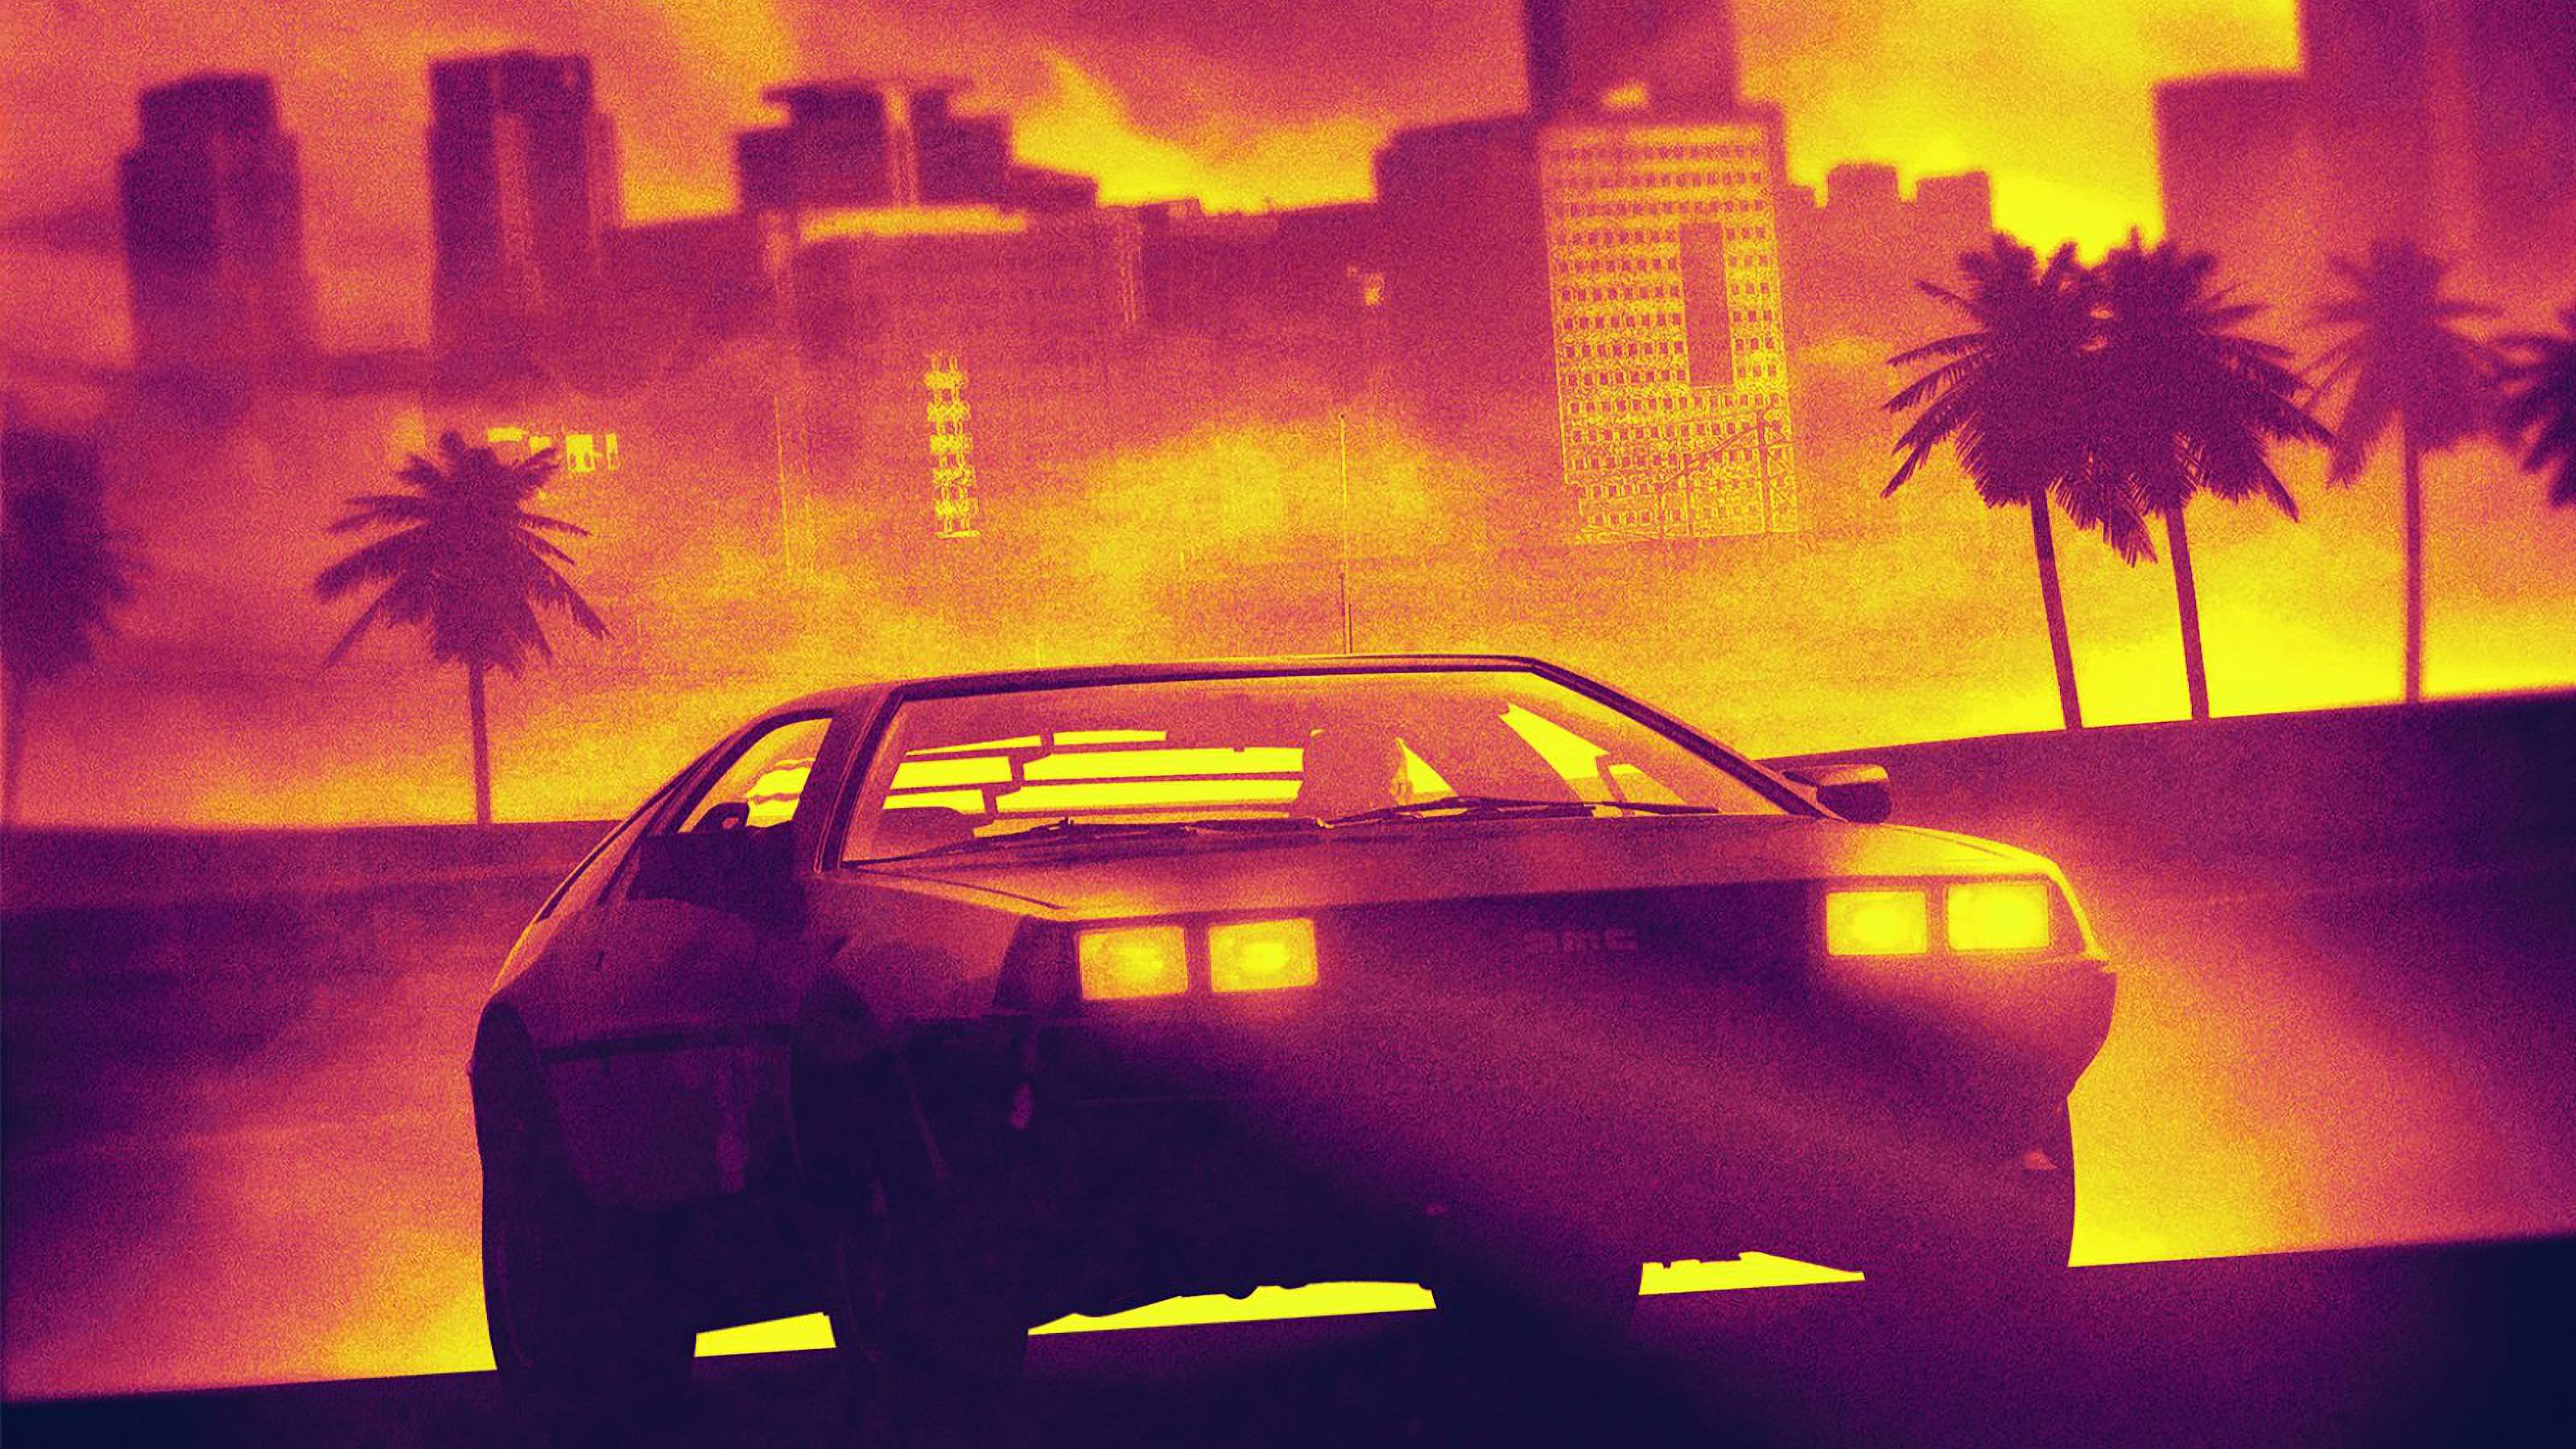 DMC DeLorean Hotline Miami Video Game Cover Art, HD Games, 4k Wallpaper, Image, Background, Photo and Picture